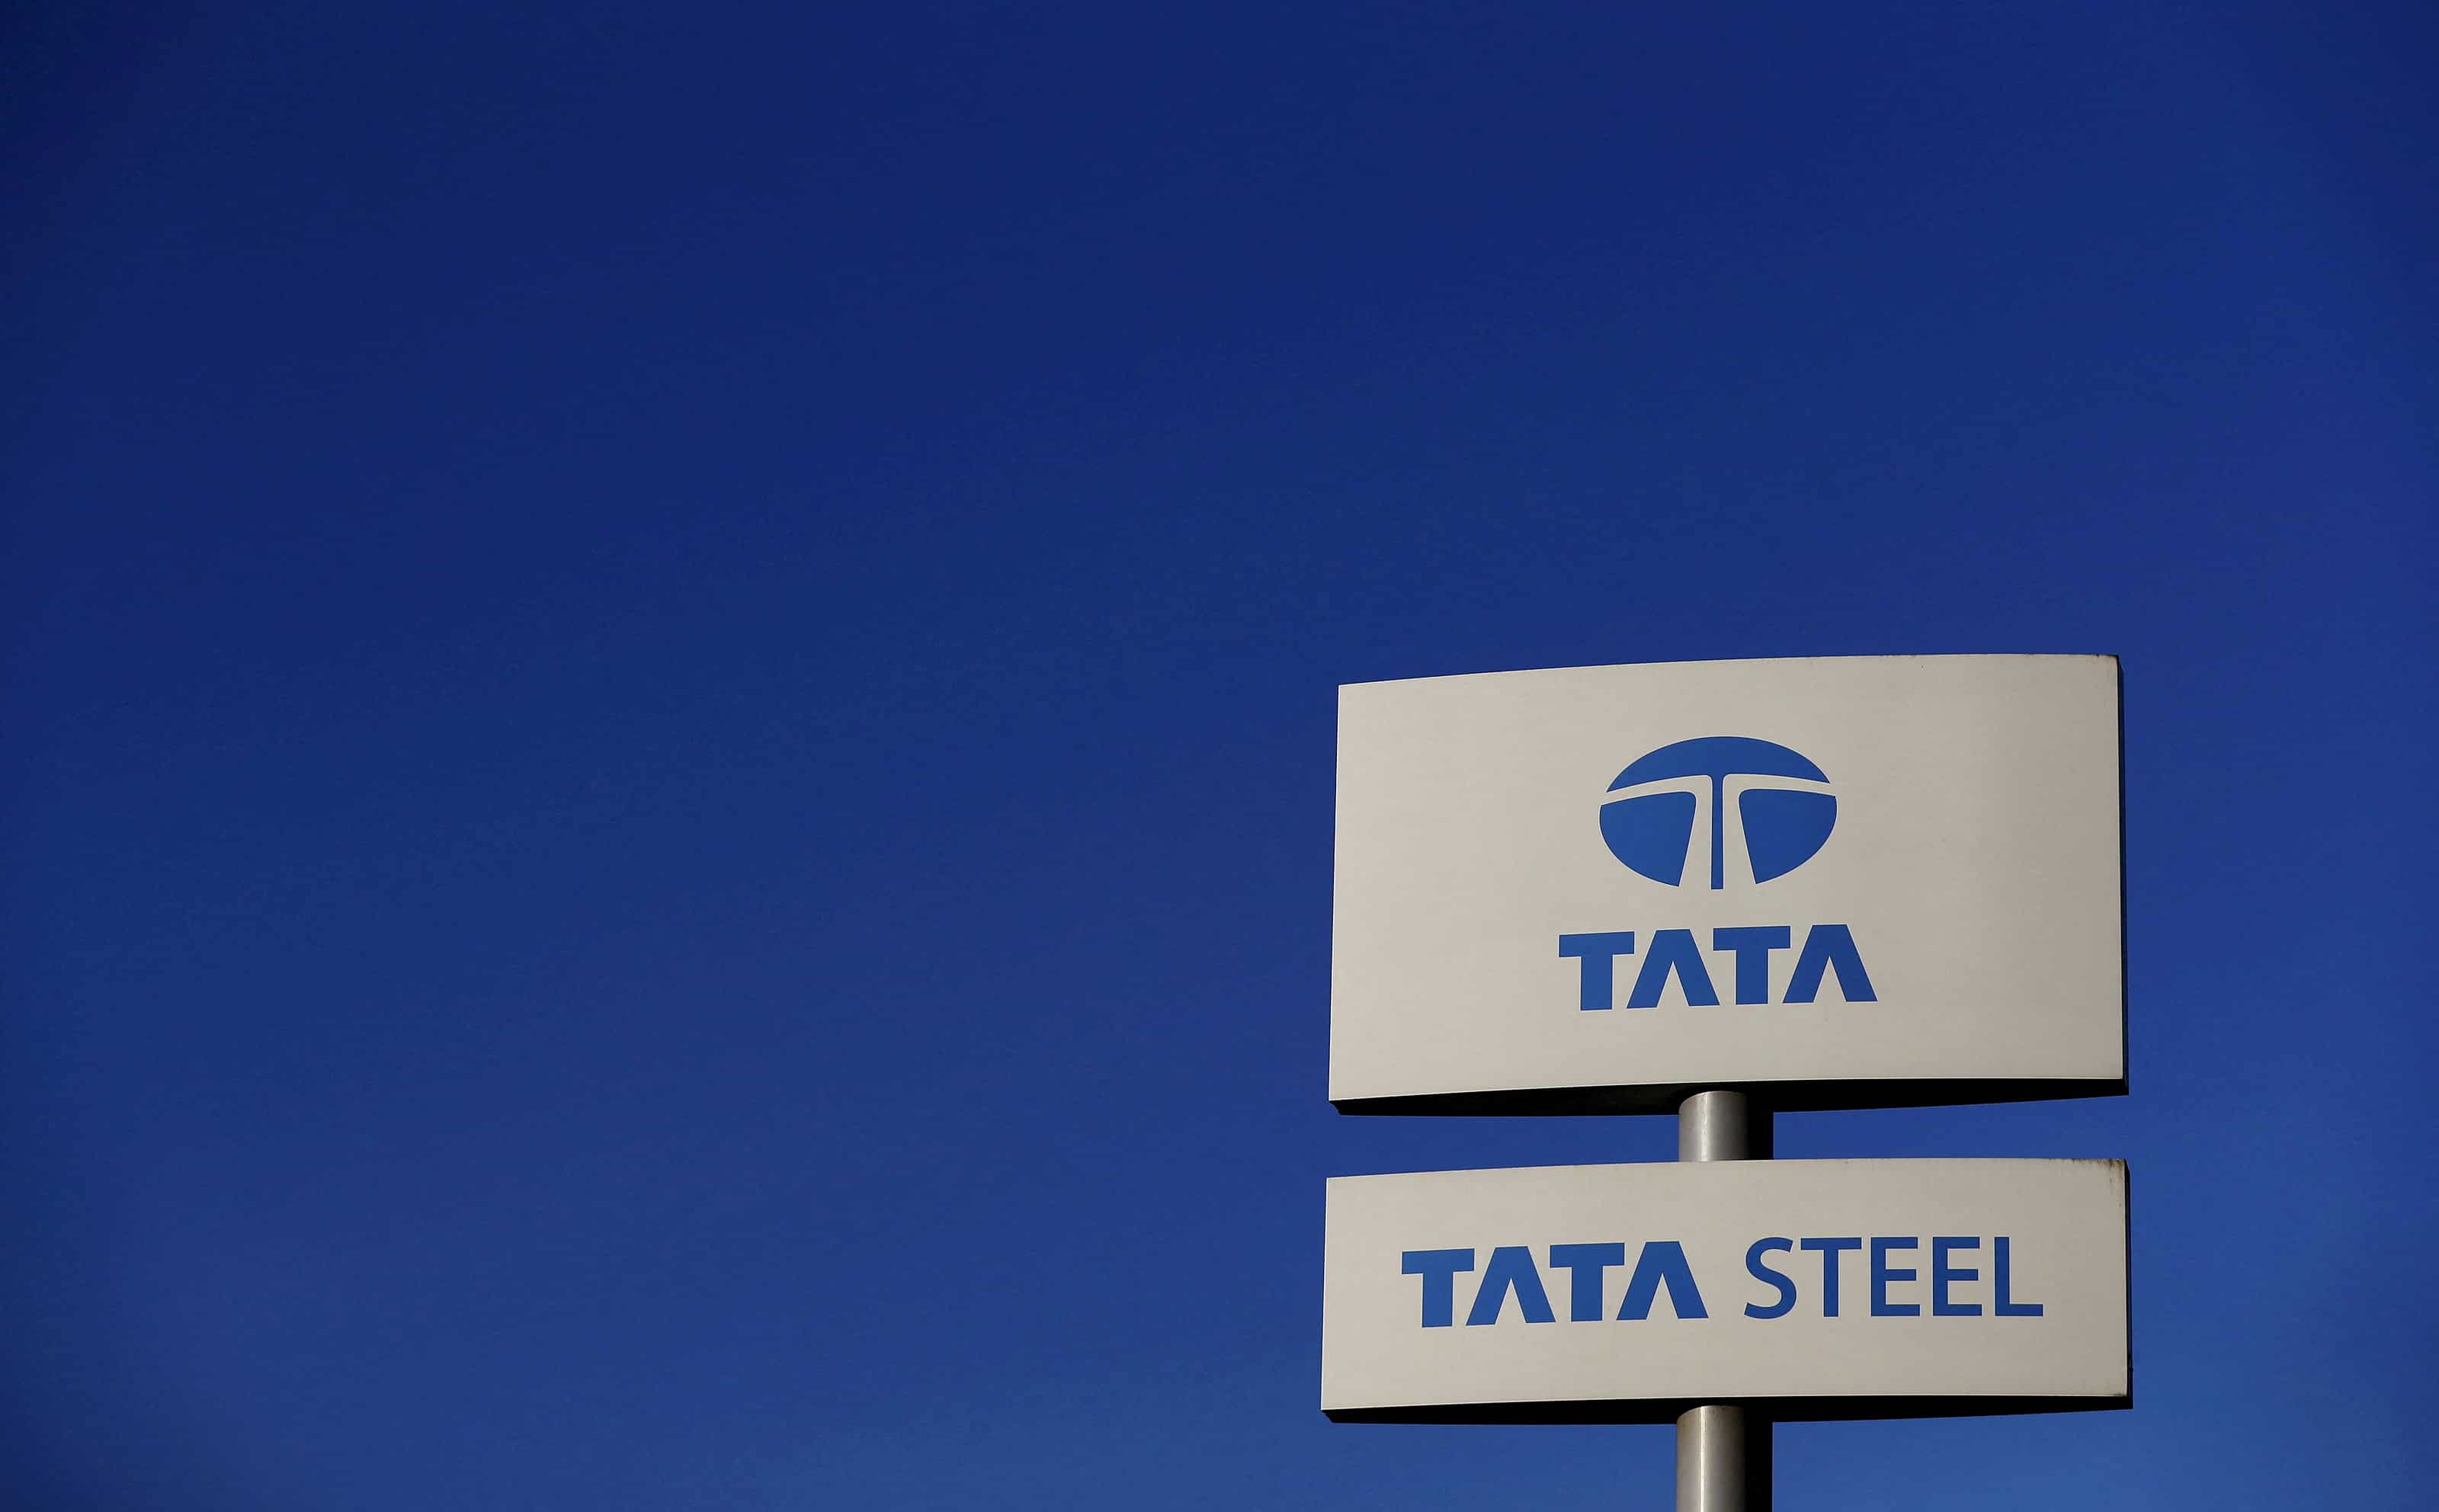 tata steel stock split latest news: scrip trades ex-split, up around 6.5% - good time to buy? experts' opinion - jnews